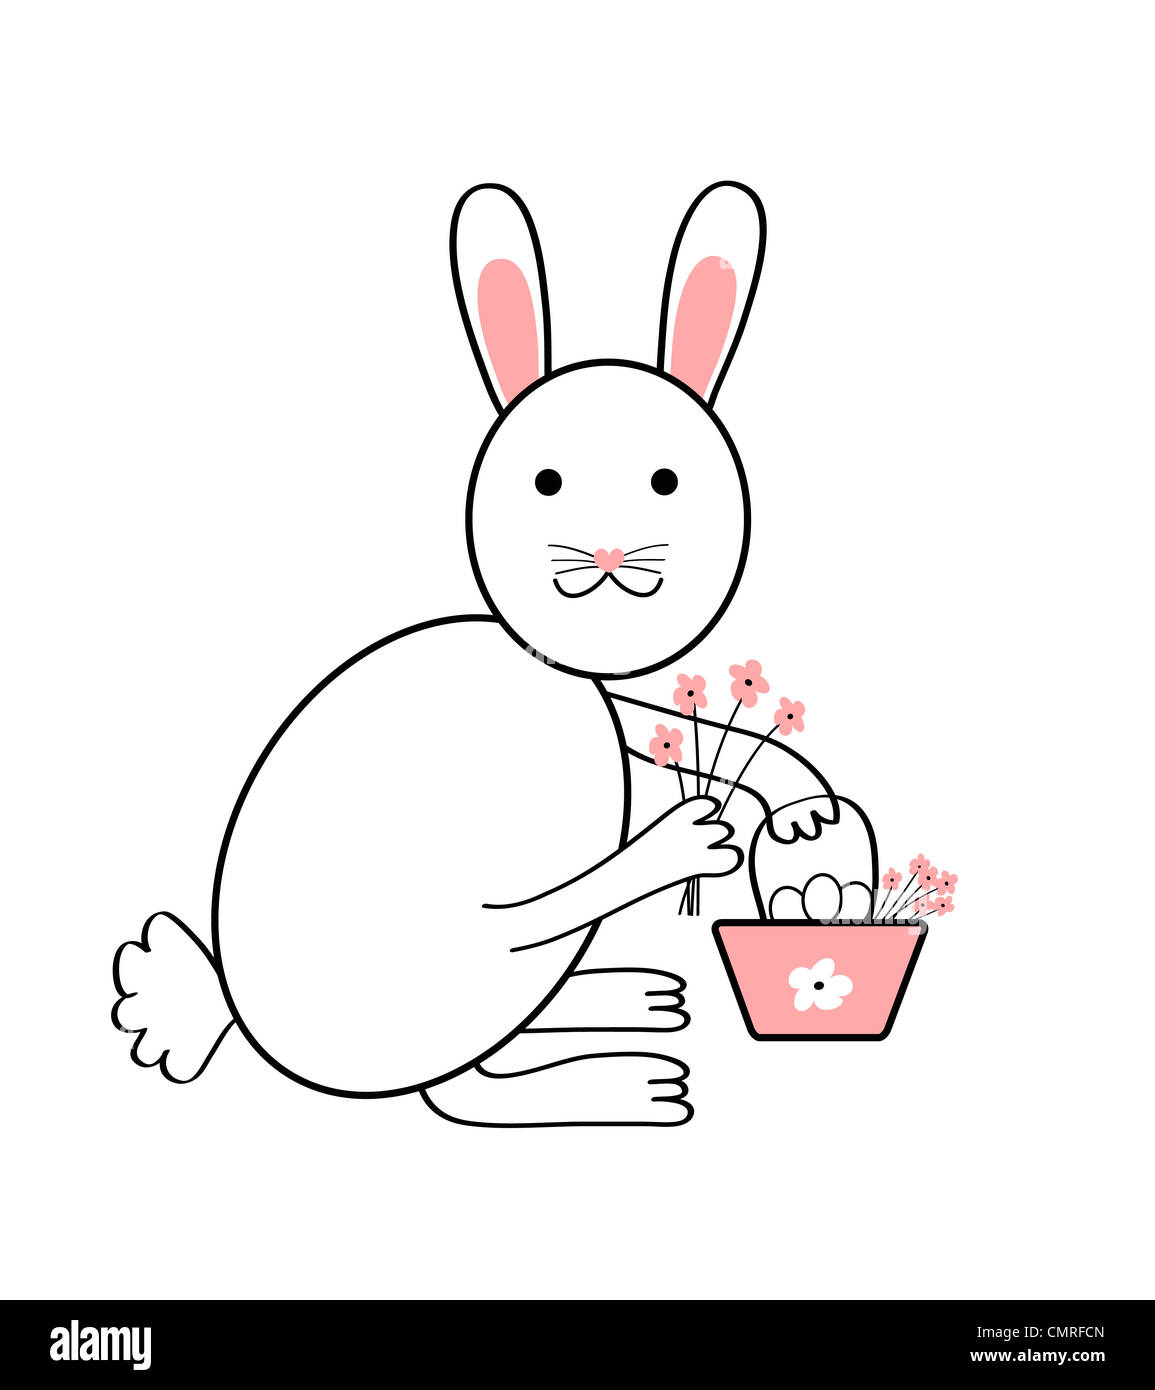 Bunny rabbit cartoon illustration Stock Photo